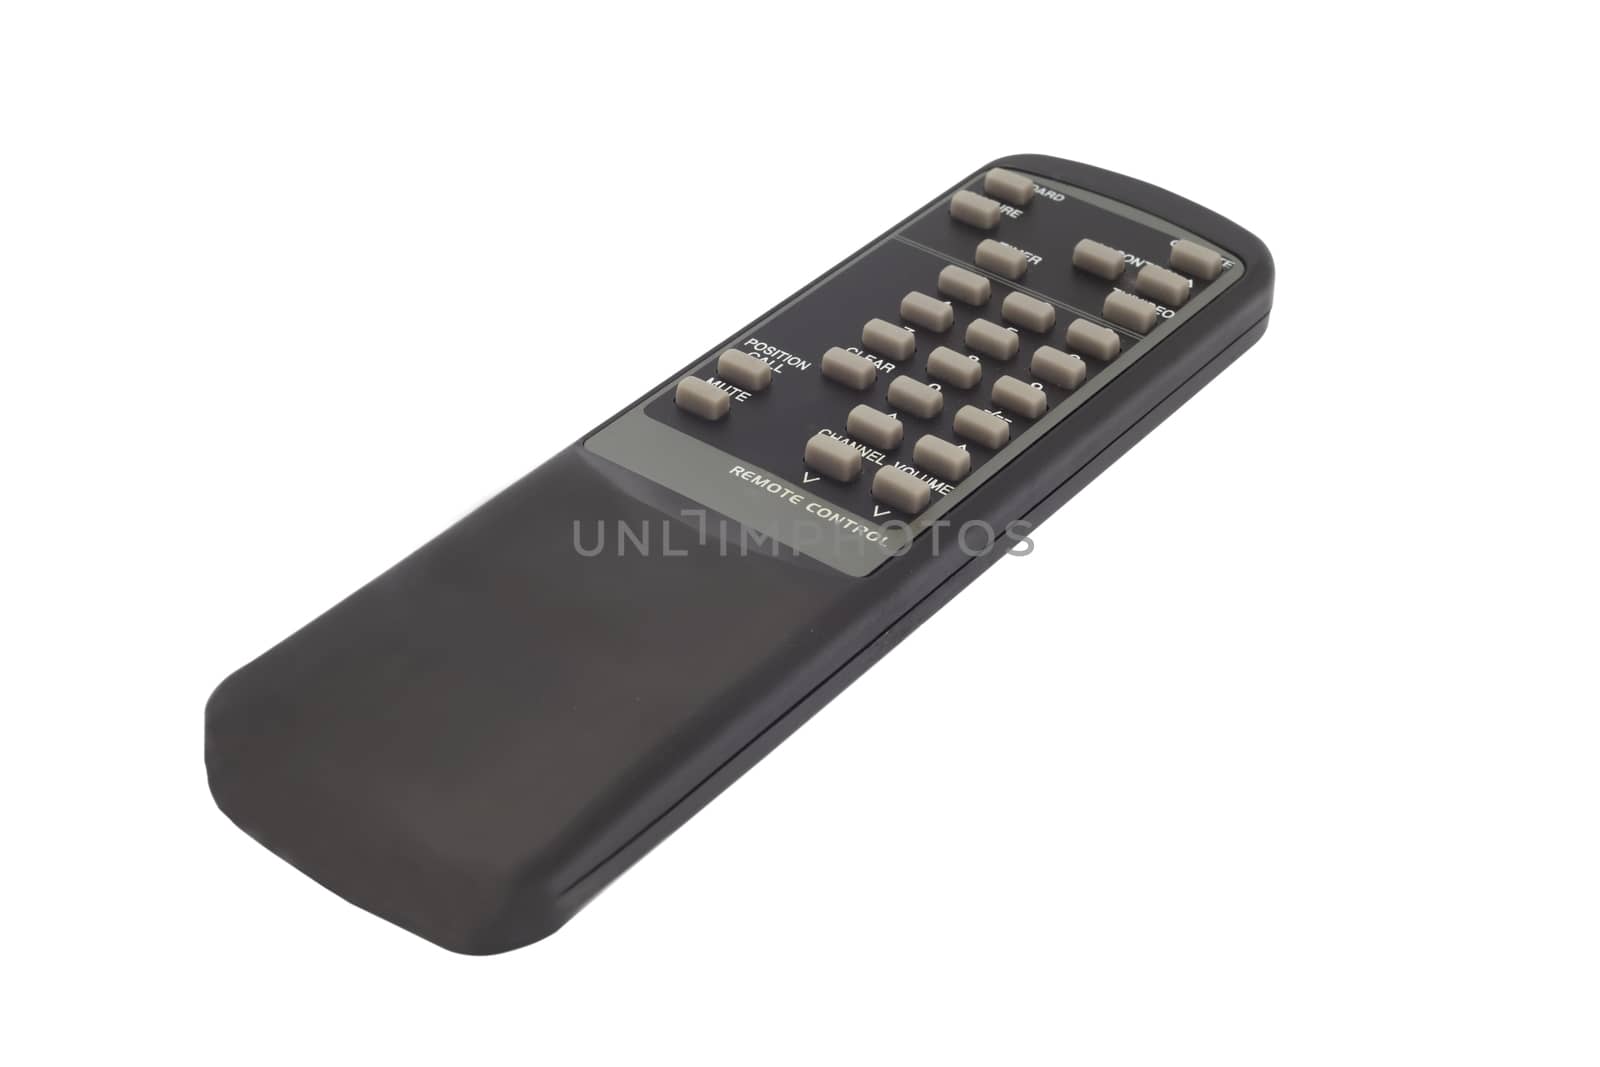 black TV remote control on white background by amnarj2006